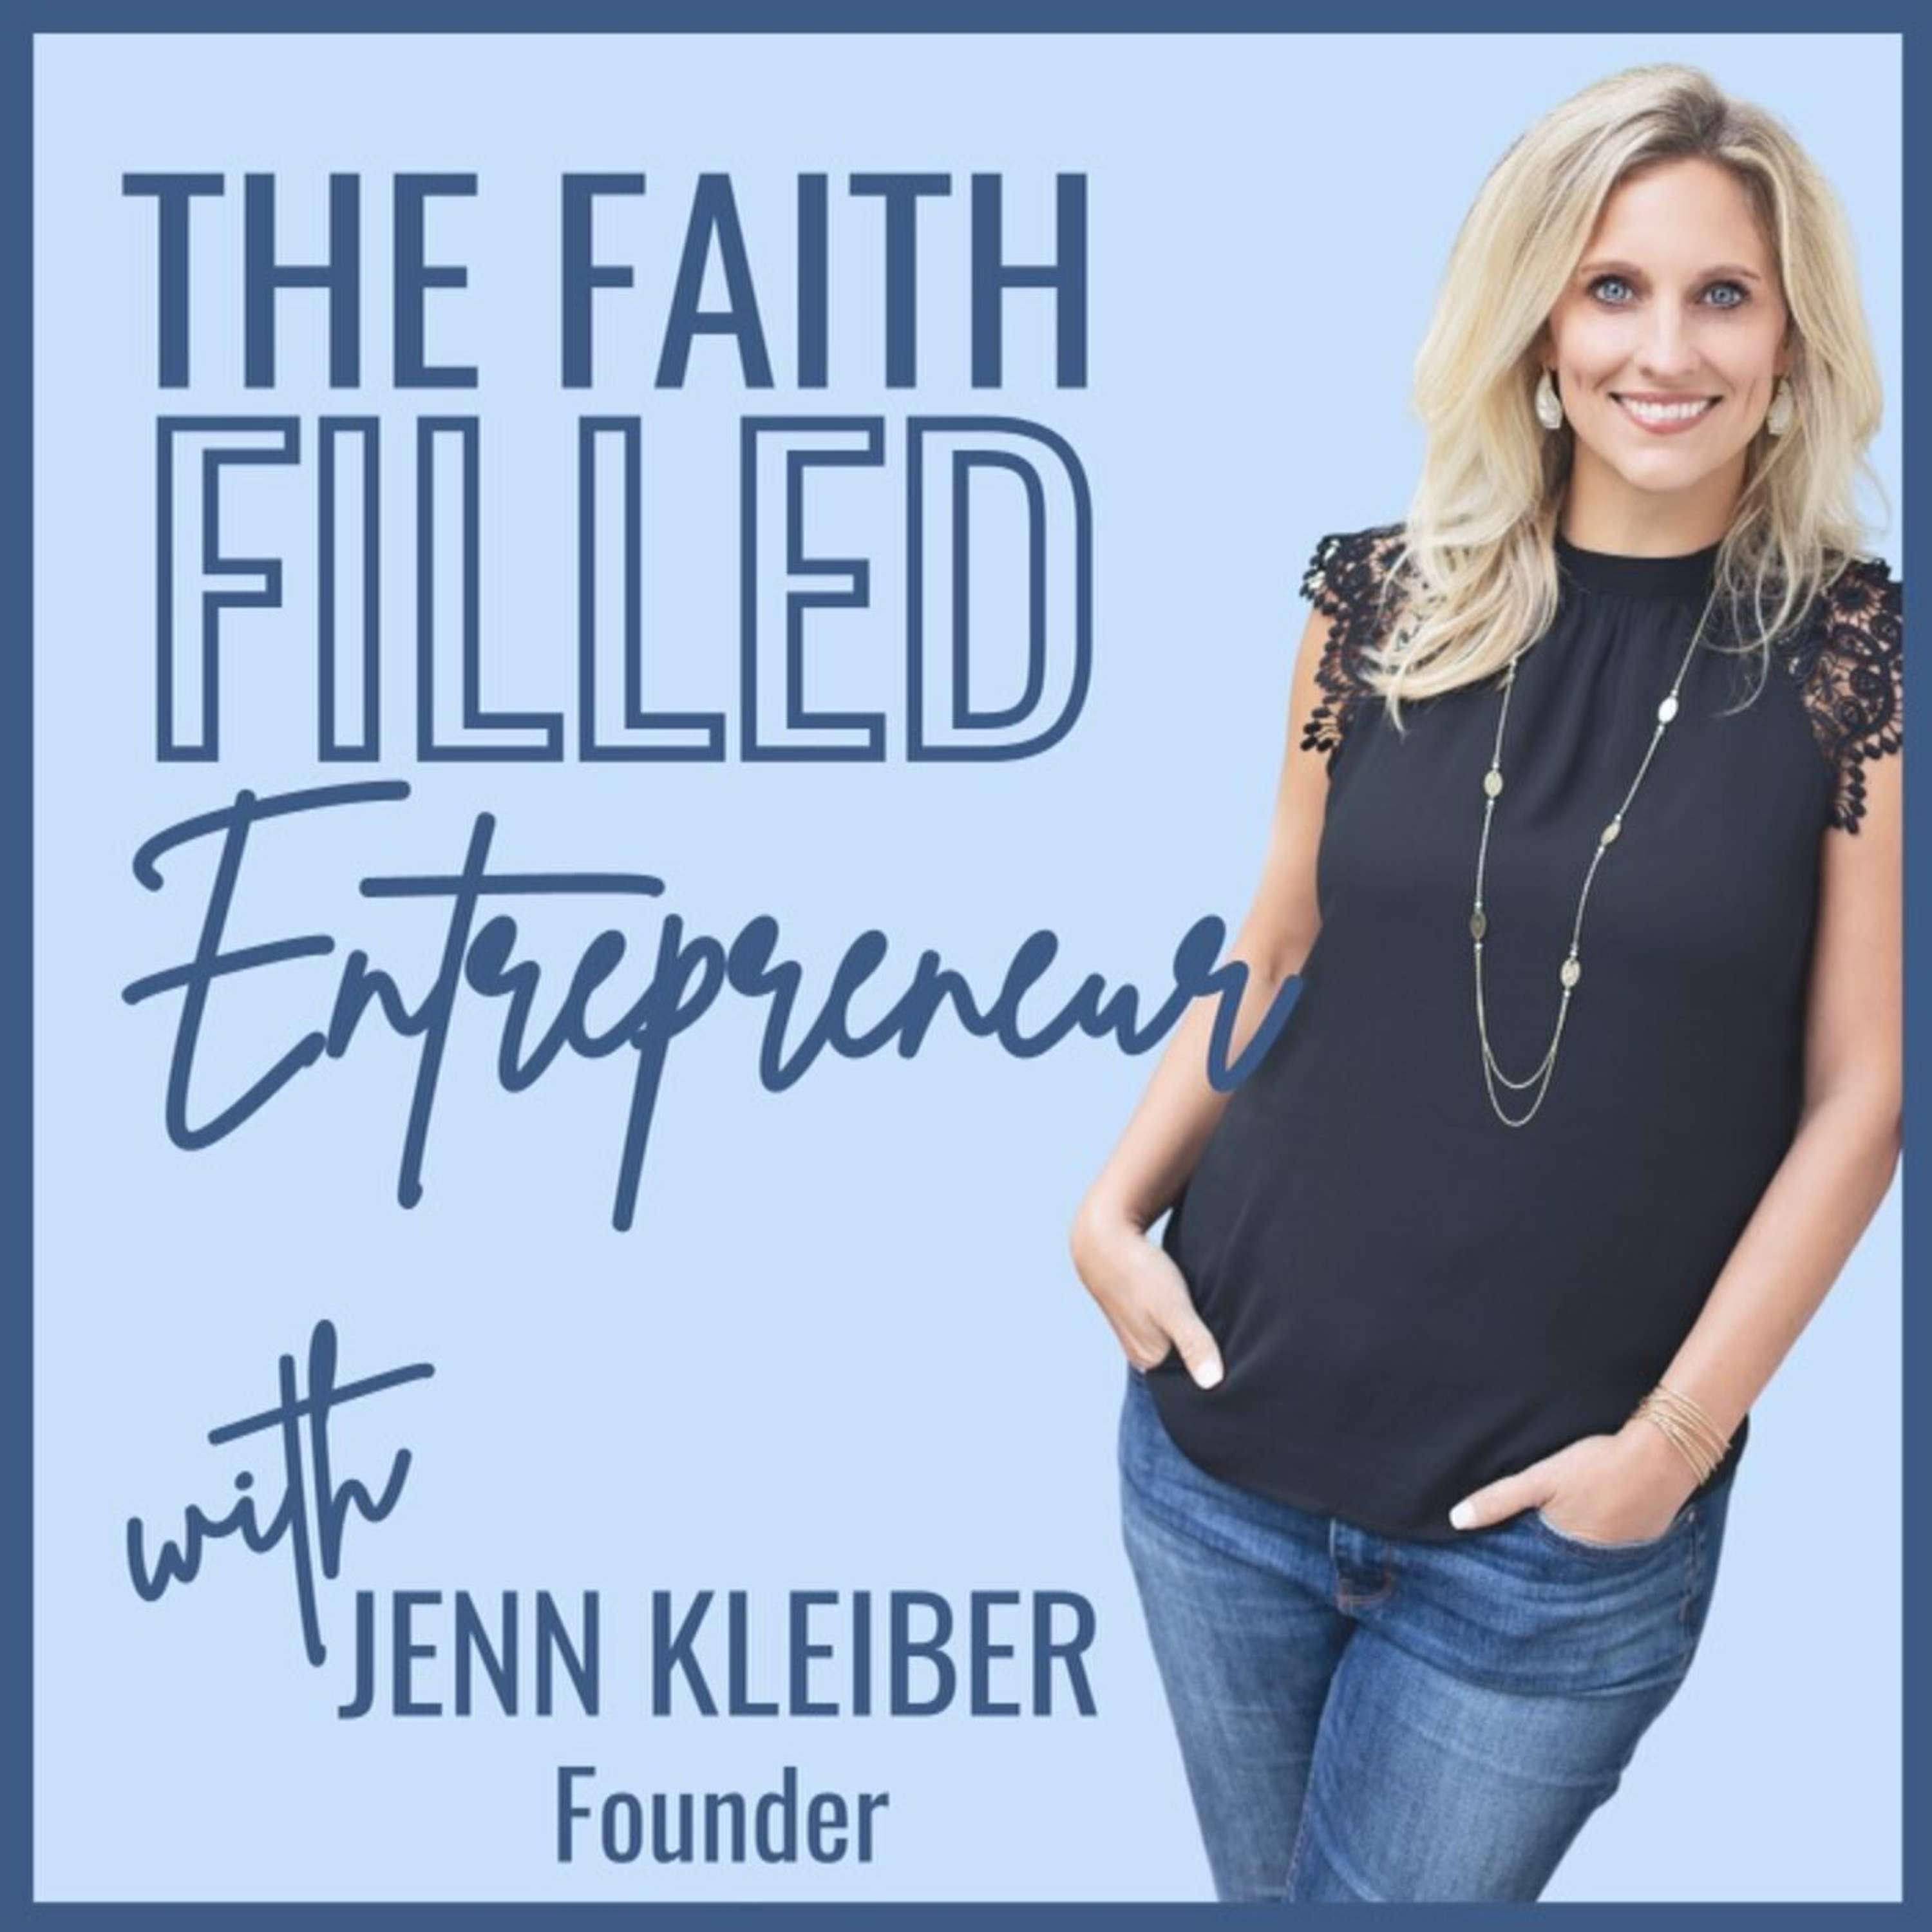 Ep 1 -Season 1: Welcome! The Creation of The Faith Filled Entrepreneur